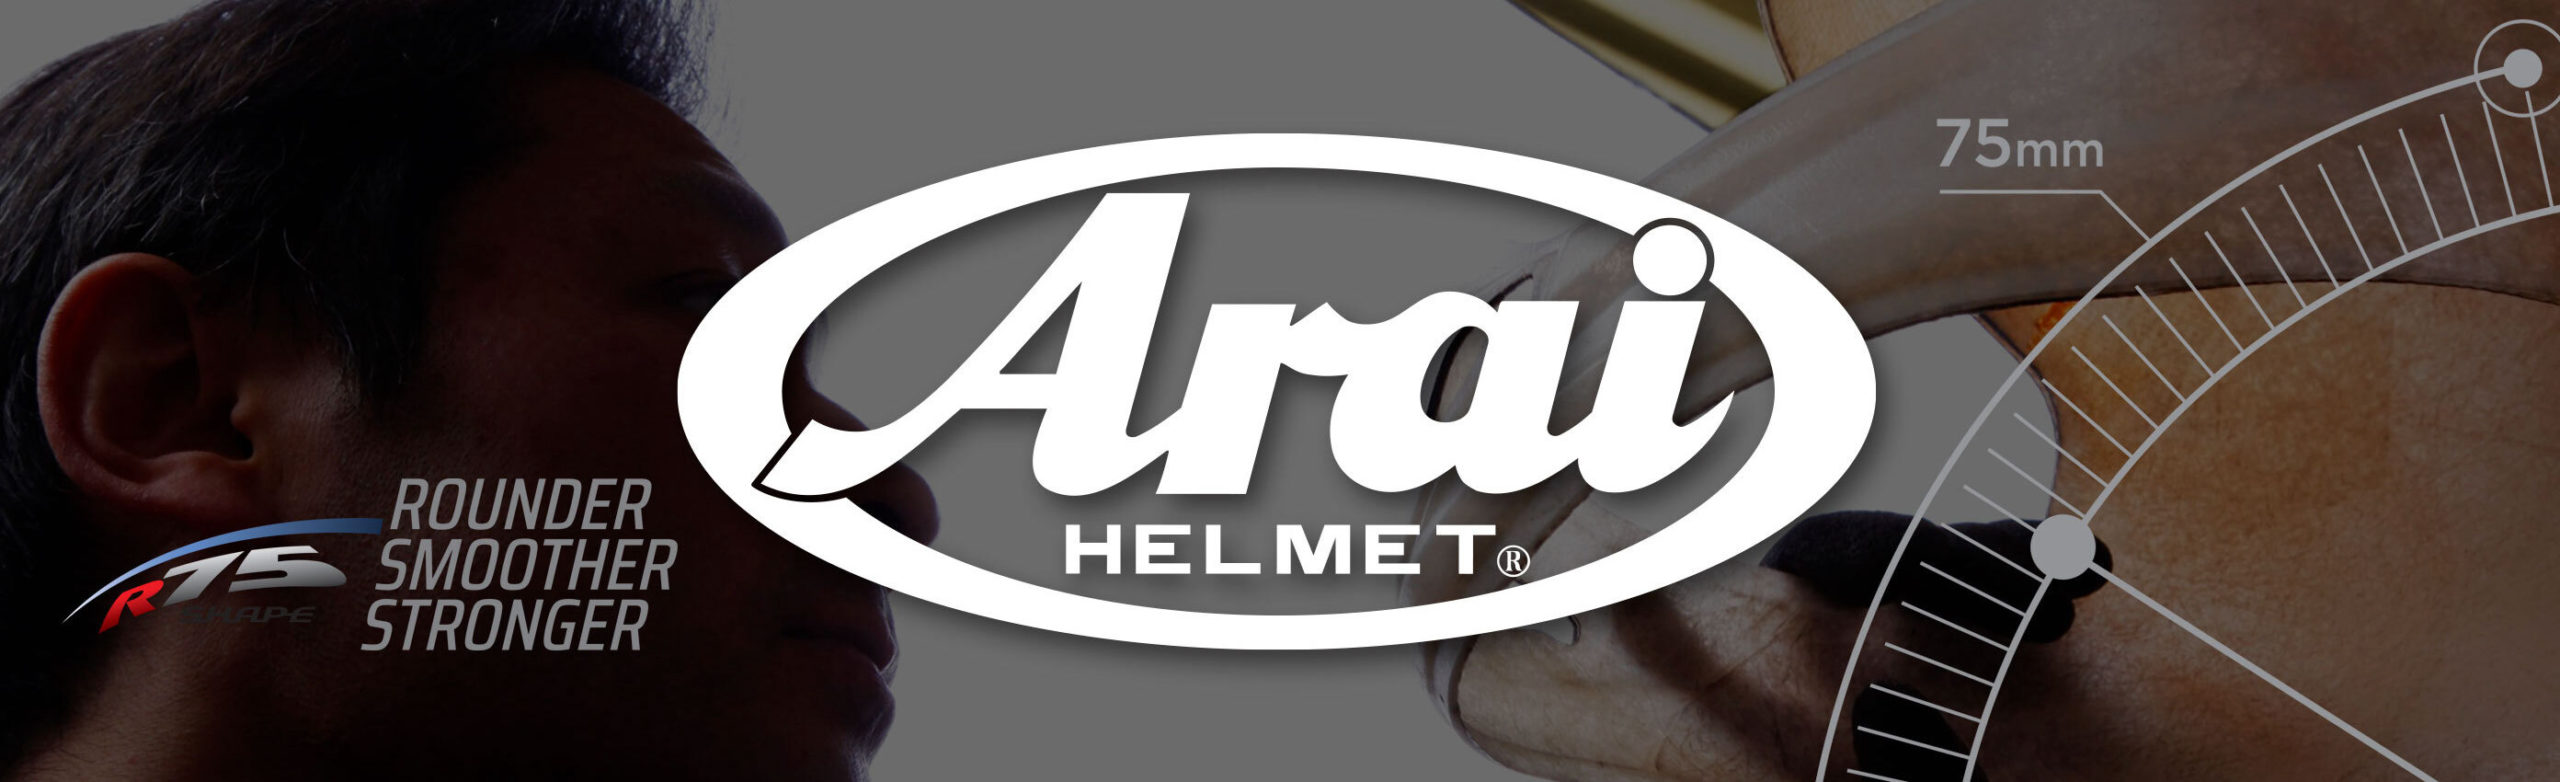 A view of Arai's website logo and newsletter logo